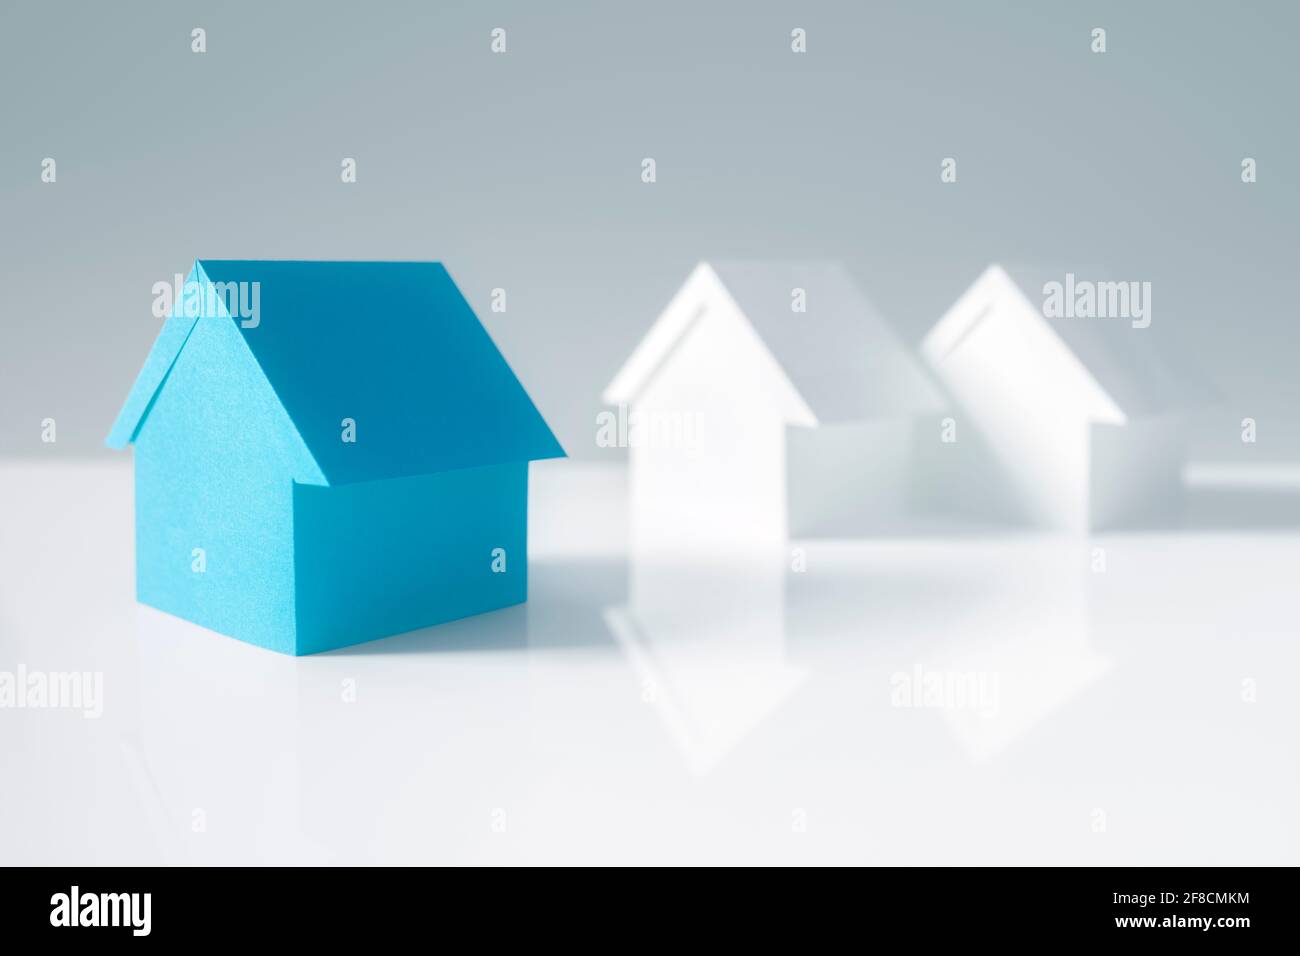 Buscando propiedades inmobiliarias, casa o nuevo hogar, casa de papel azul que se pone de pie Foto de stock